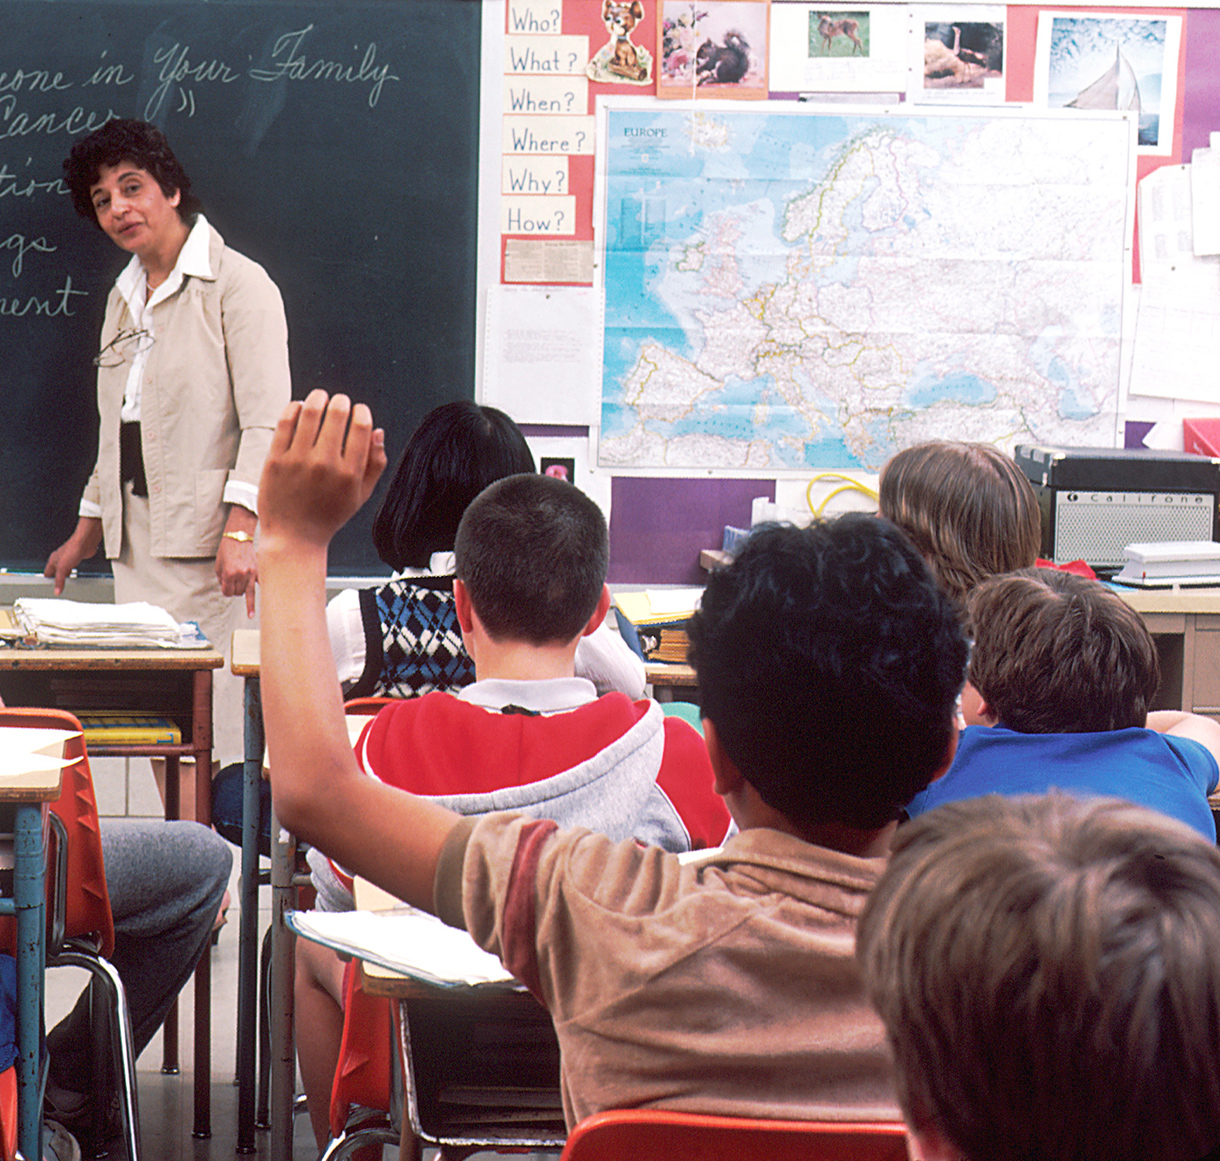 Teacher in front of classroom at blackboard, student raising hand